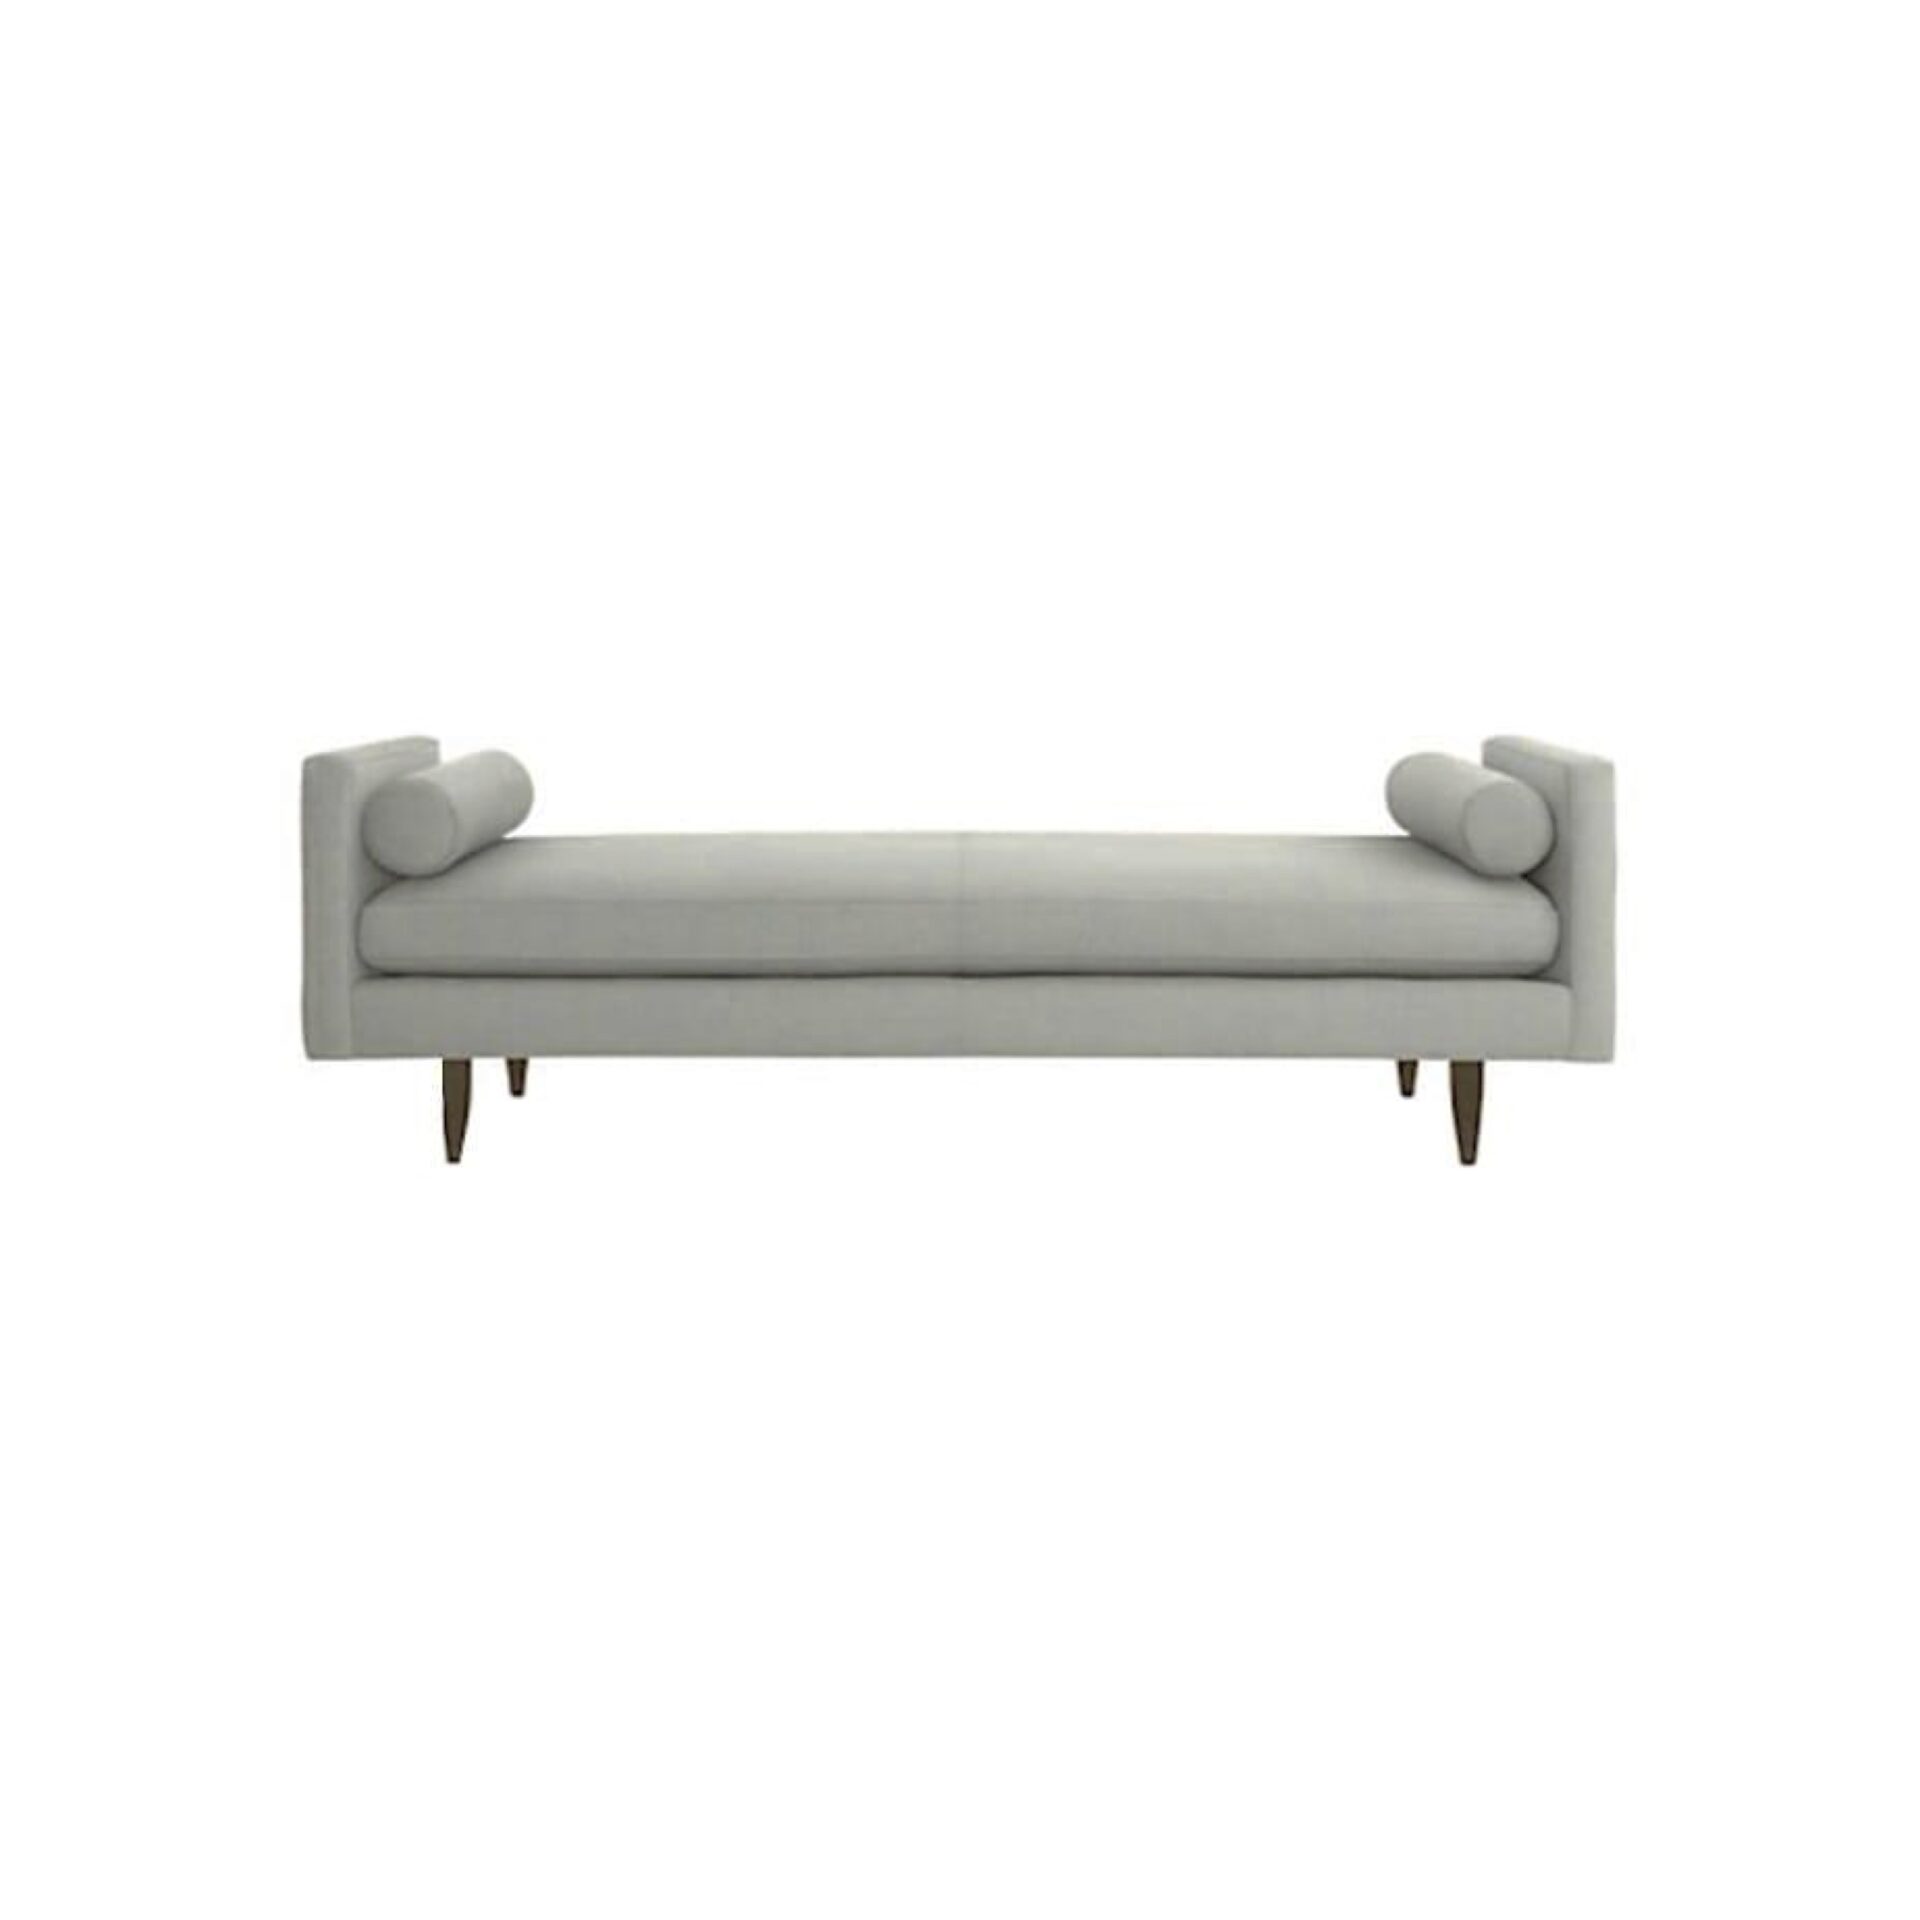 MALIA-upholstered-bench-luxury-furniture-blend-home-furnishings